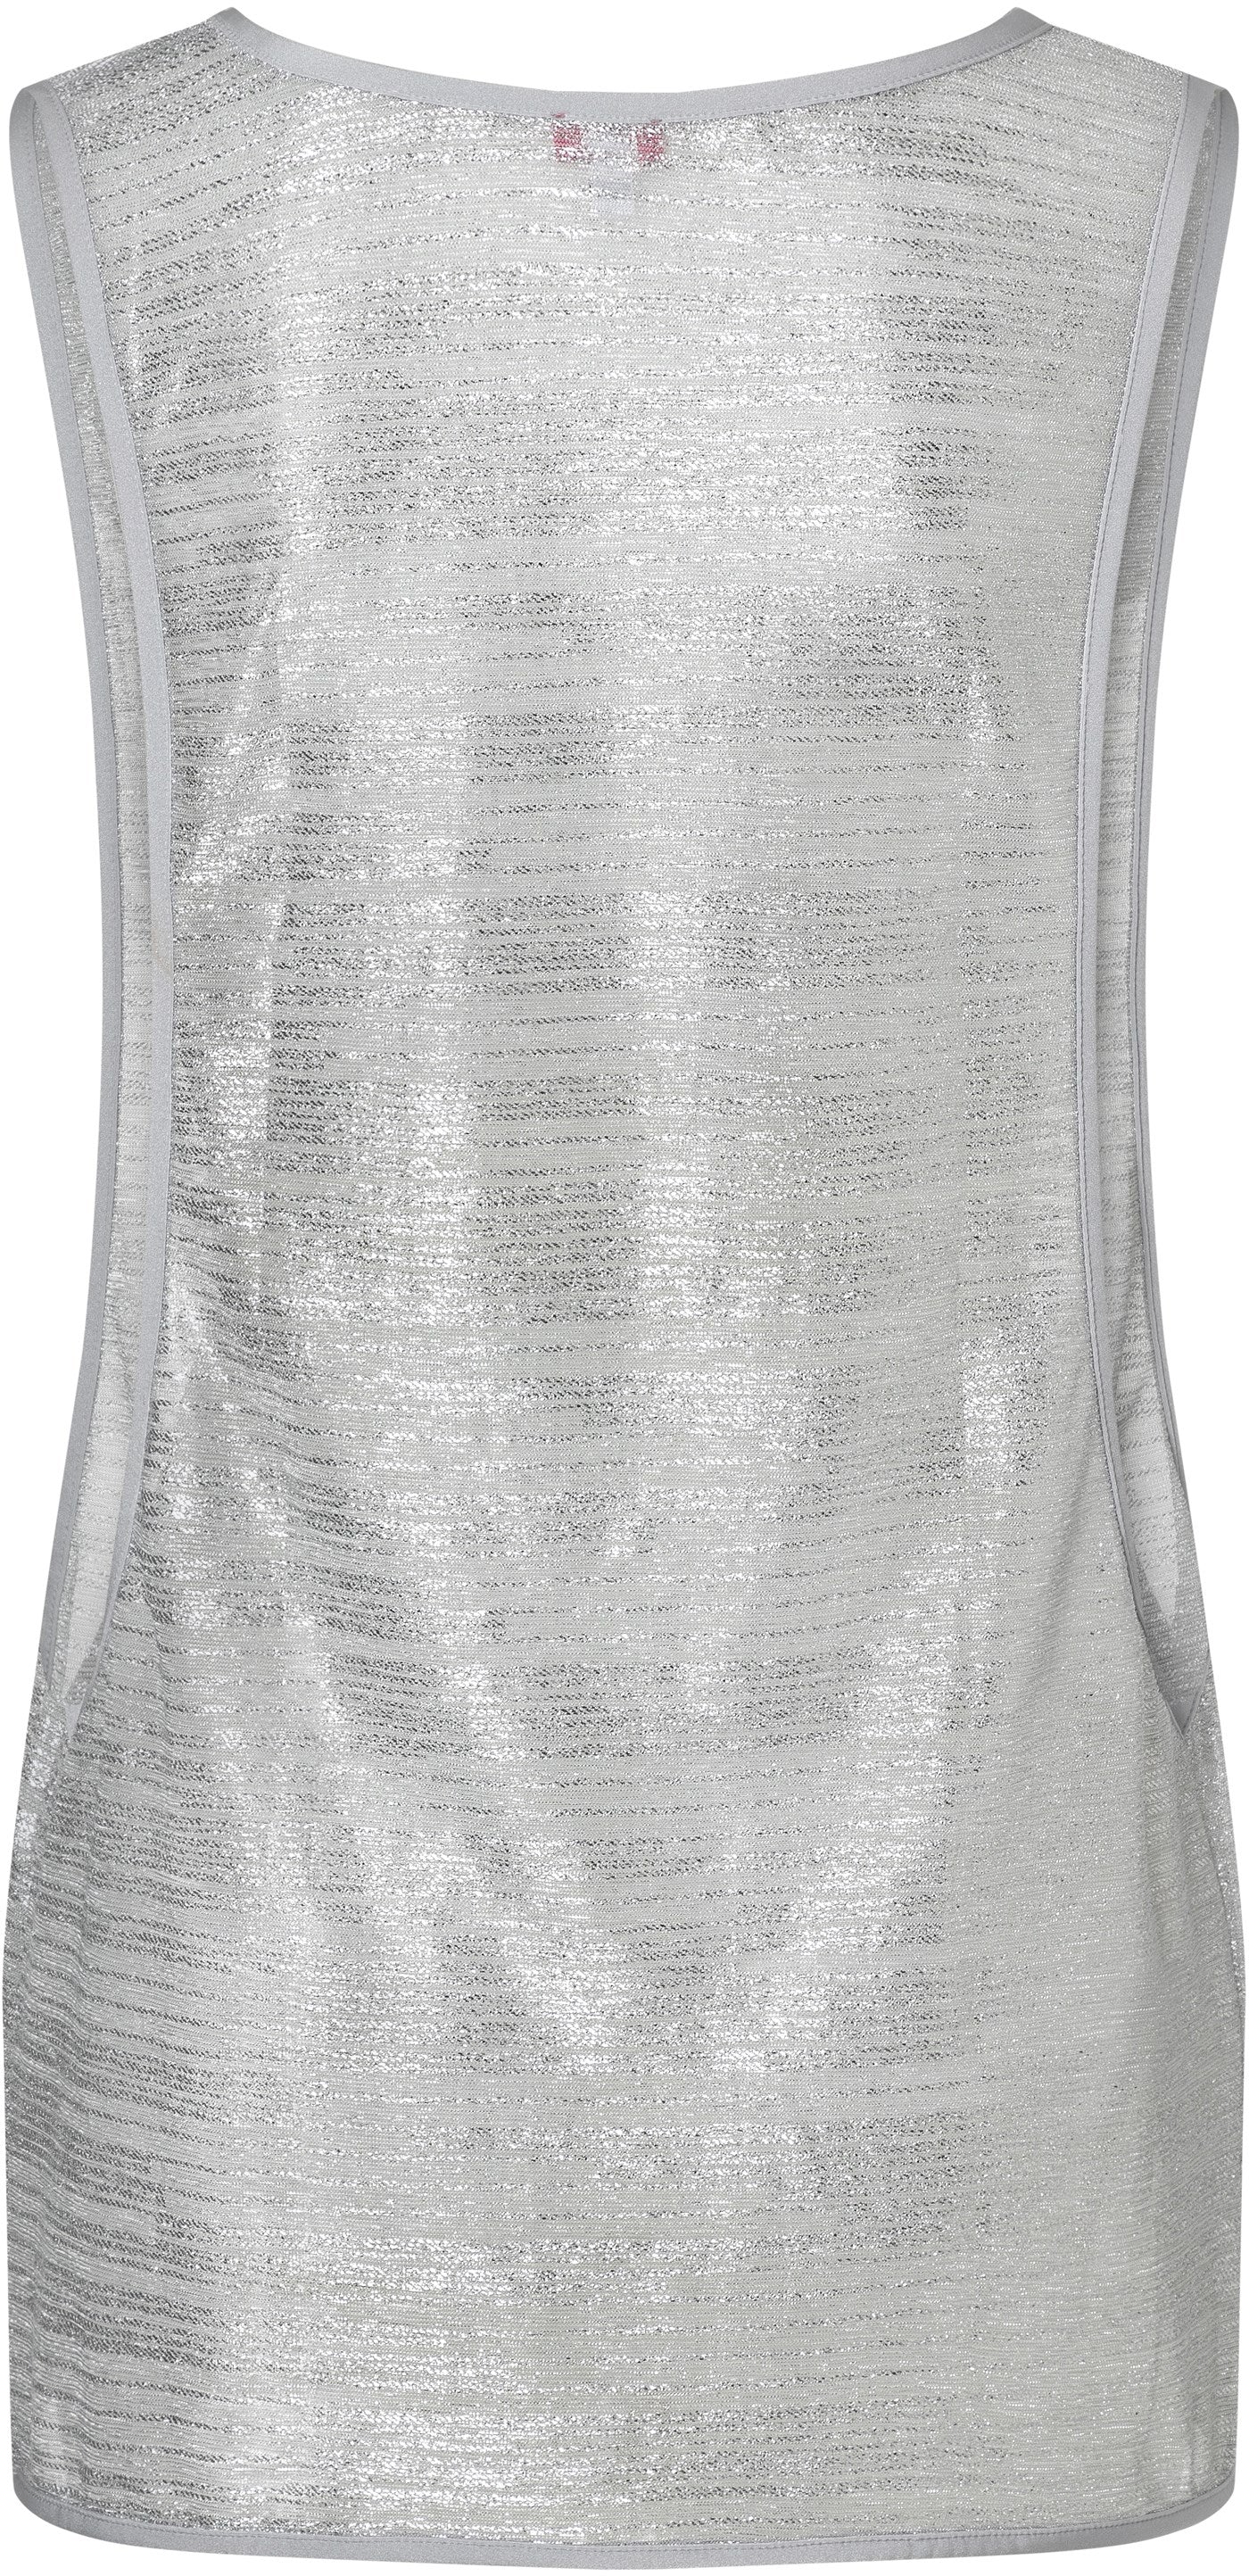 Eniqua - Silver Glitter Tank Dress